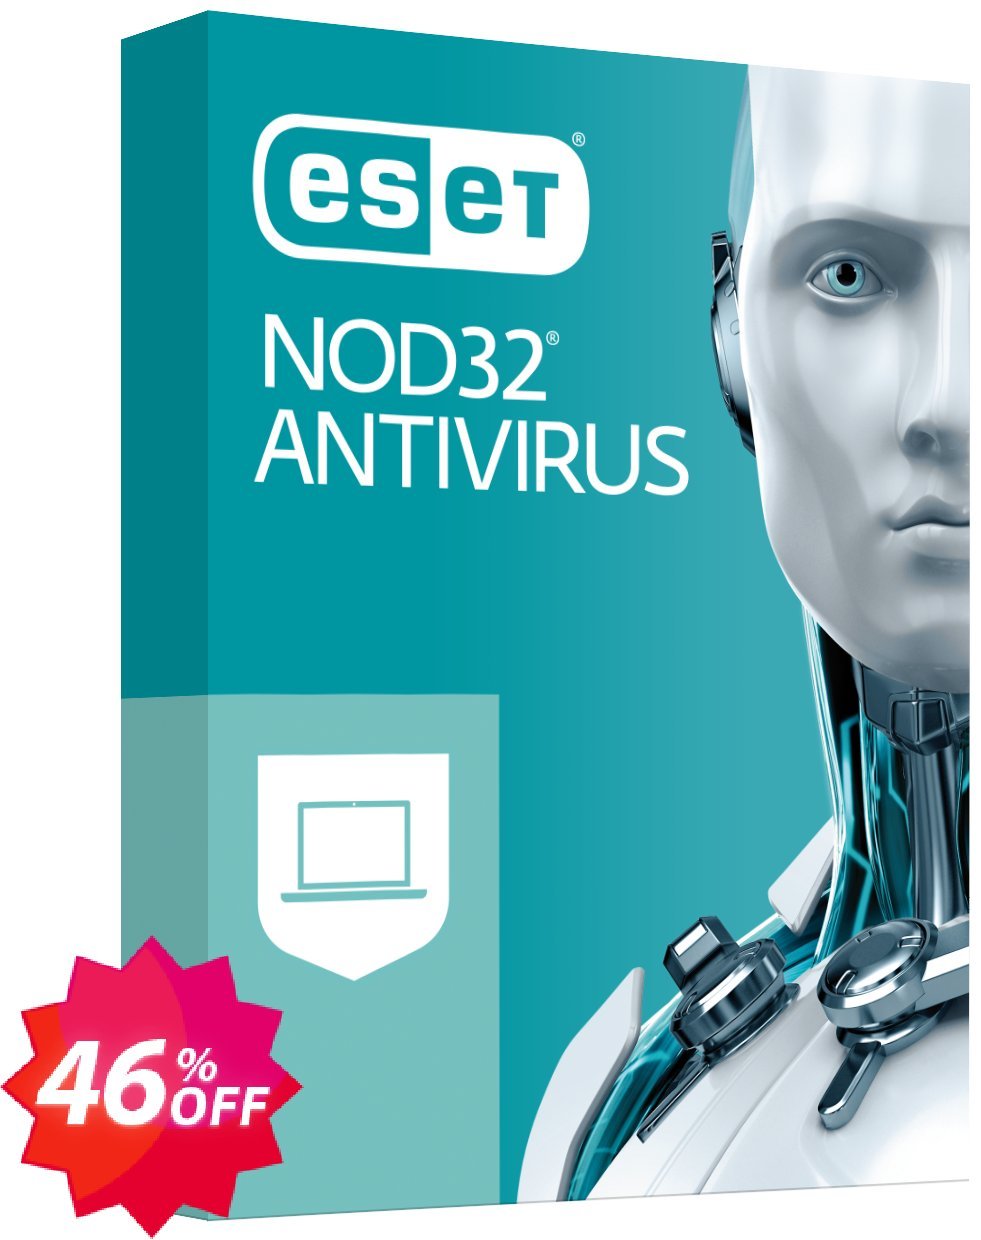 ESET NOD32 Antivirus - Renew 2 Years 1 Device Coupon code 46% discount 